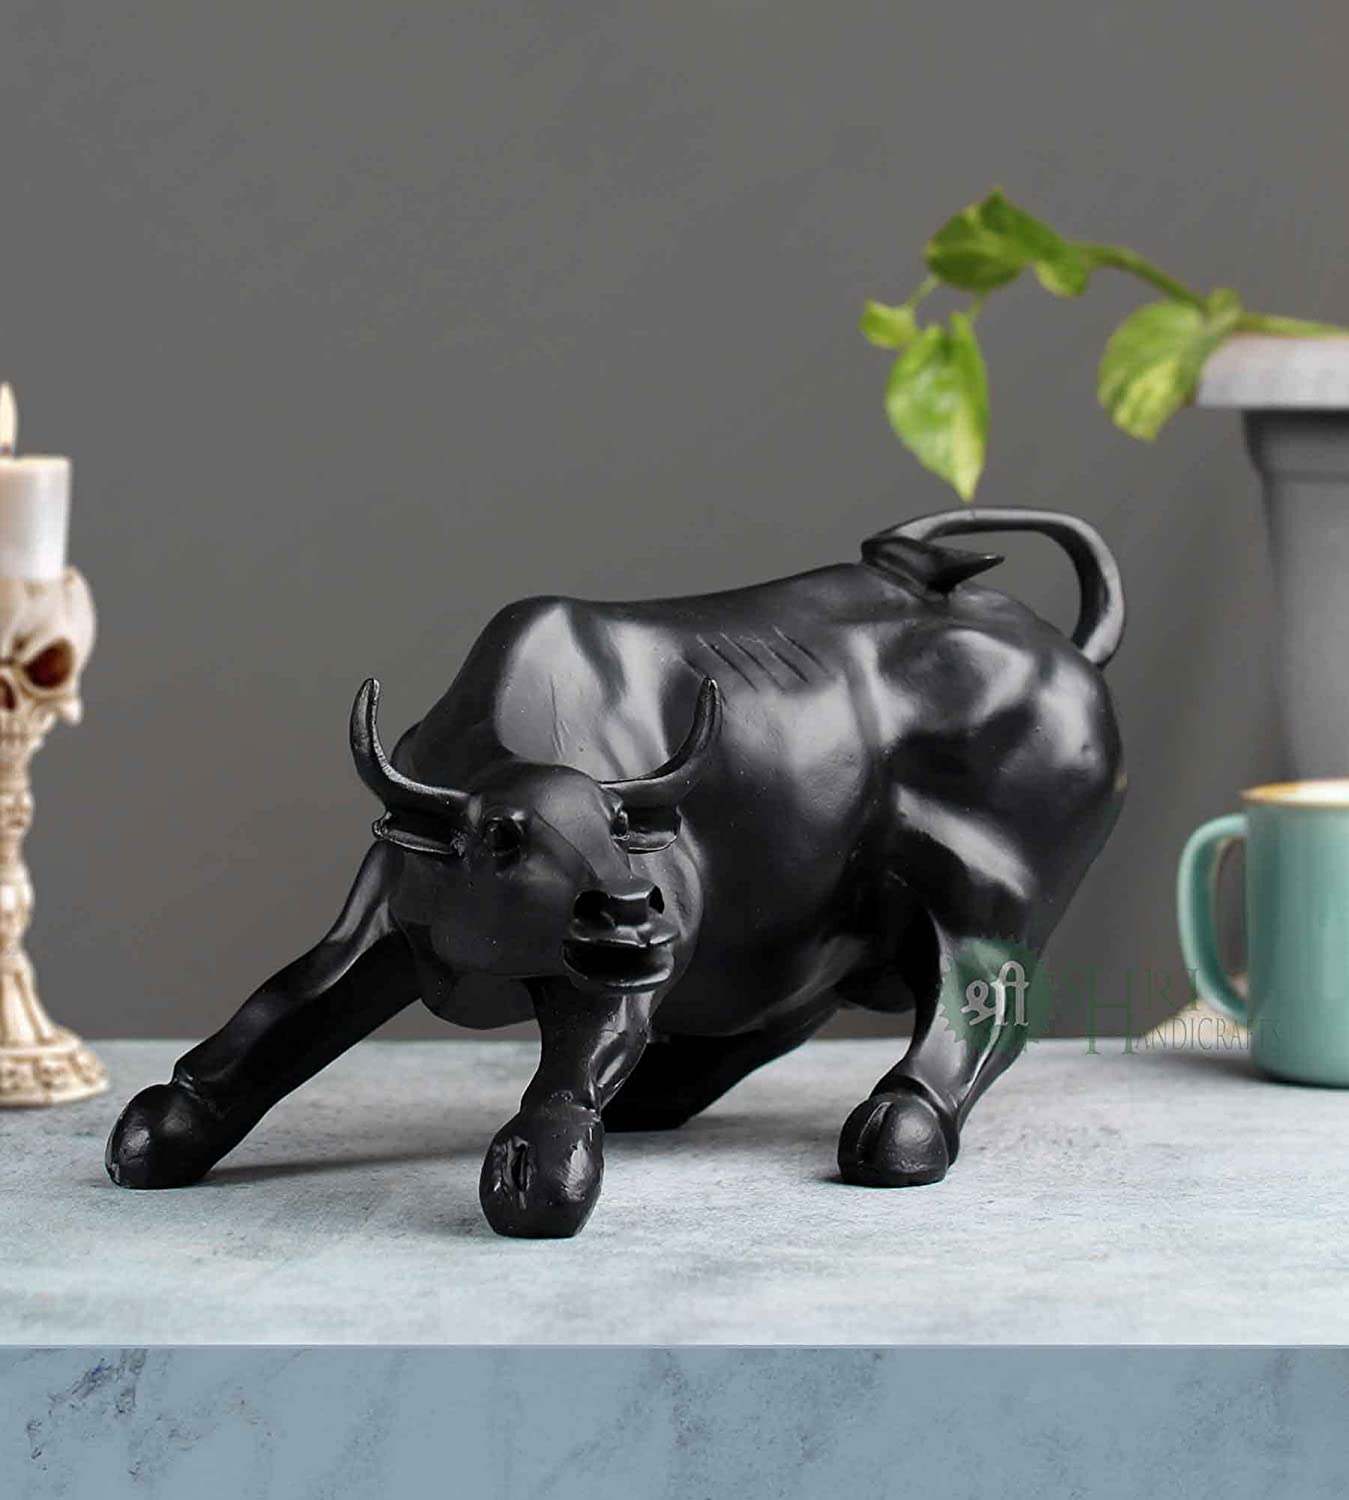 Resin Geometric Bull Sculpture Abstract Animal Figurine (Black, 10")